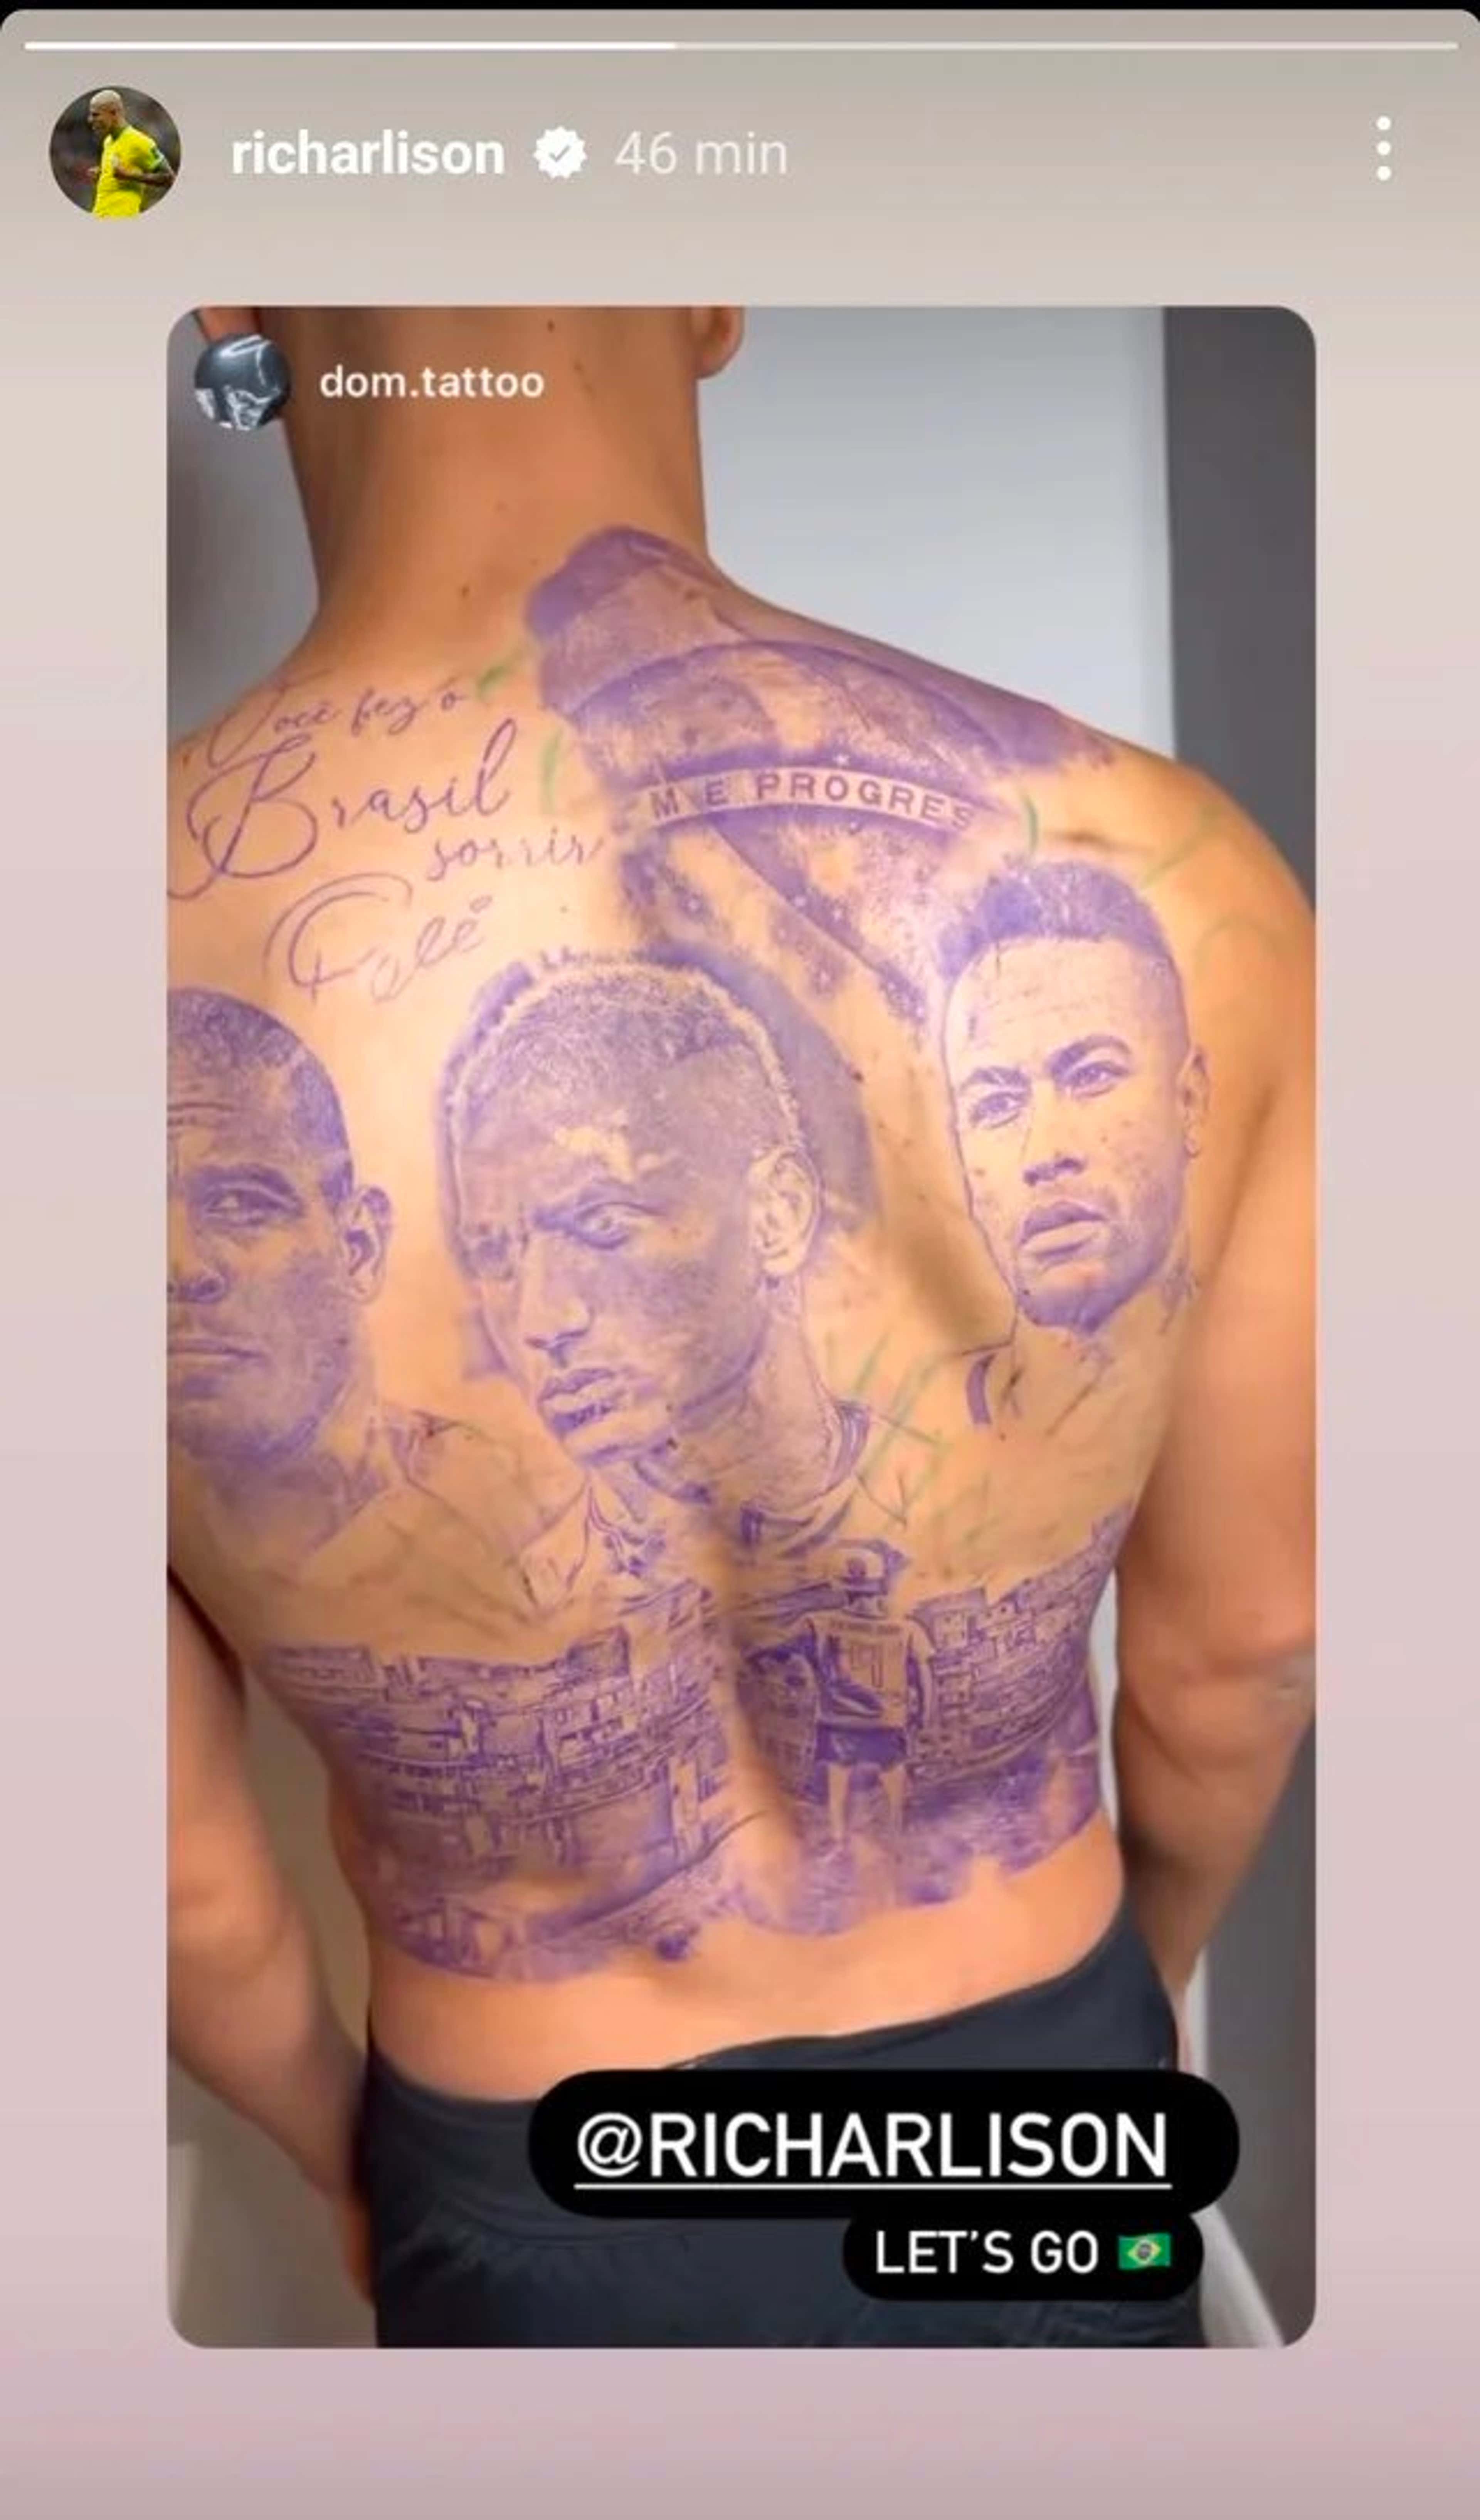 Richarlison gets tattoo of himself, Neymar & Ronaldo on his back